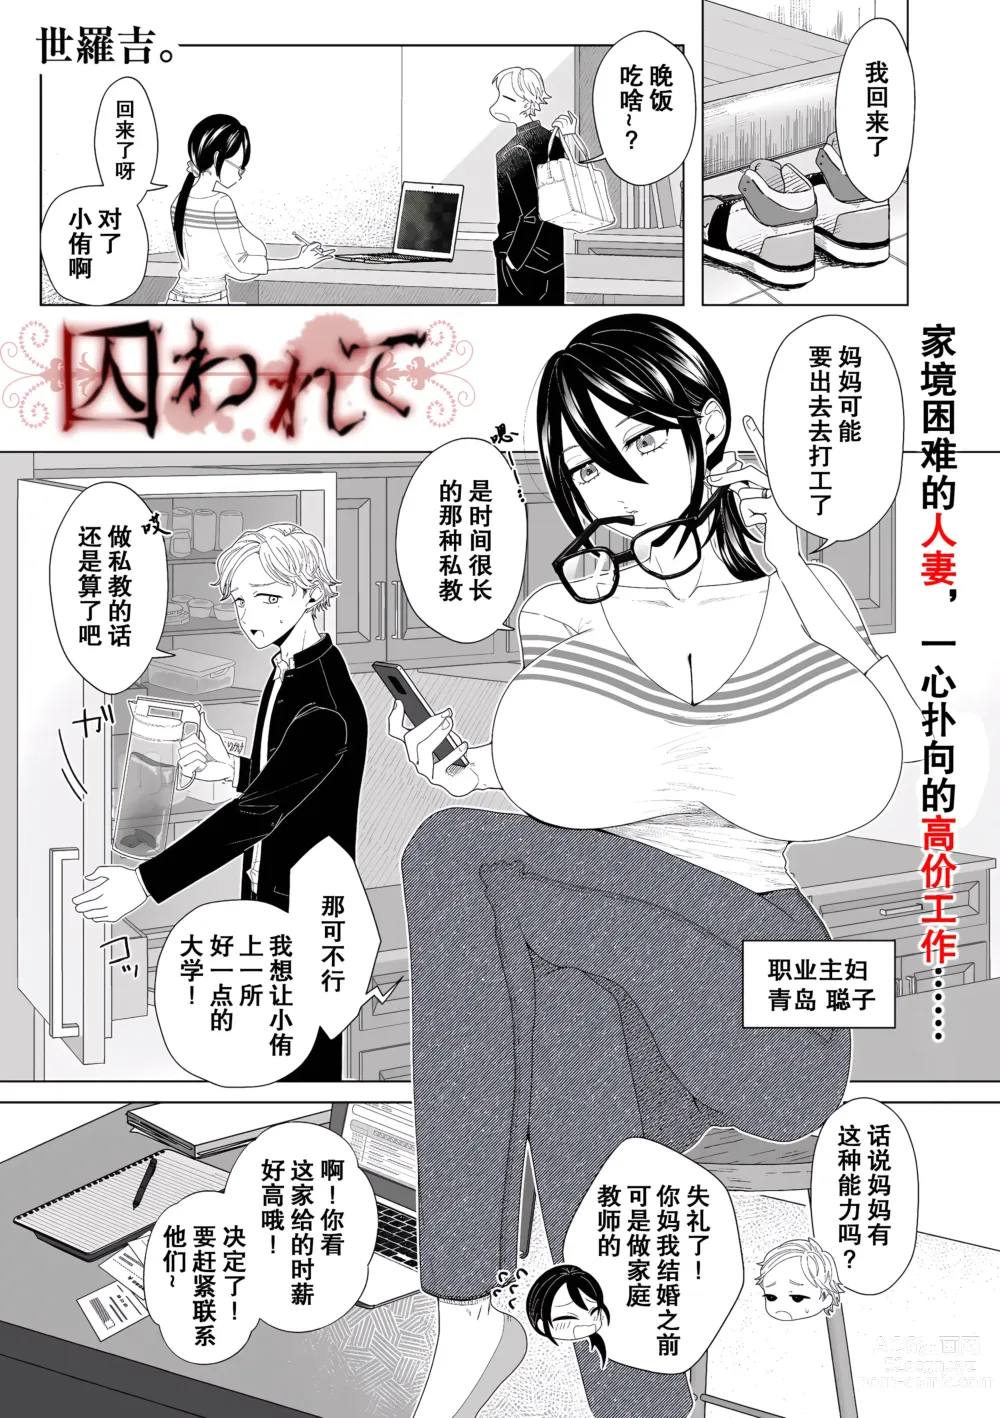 Page 2 of manga Torawarete